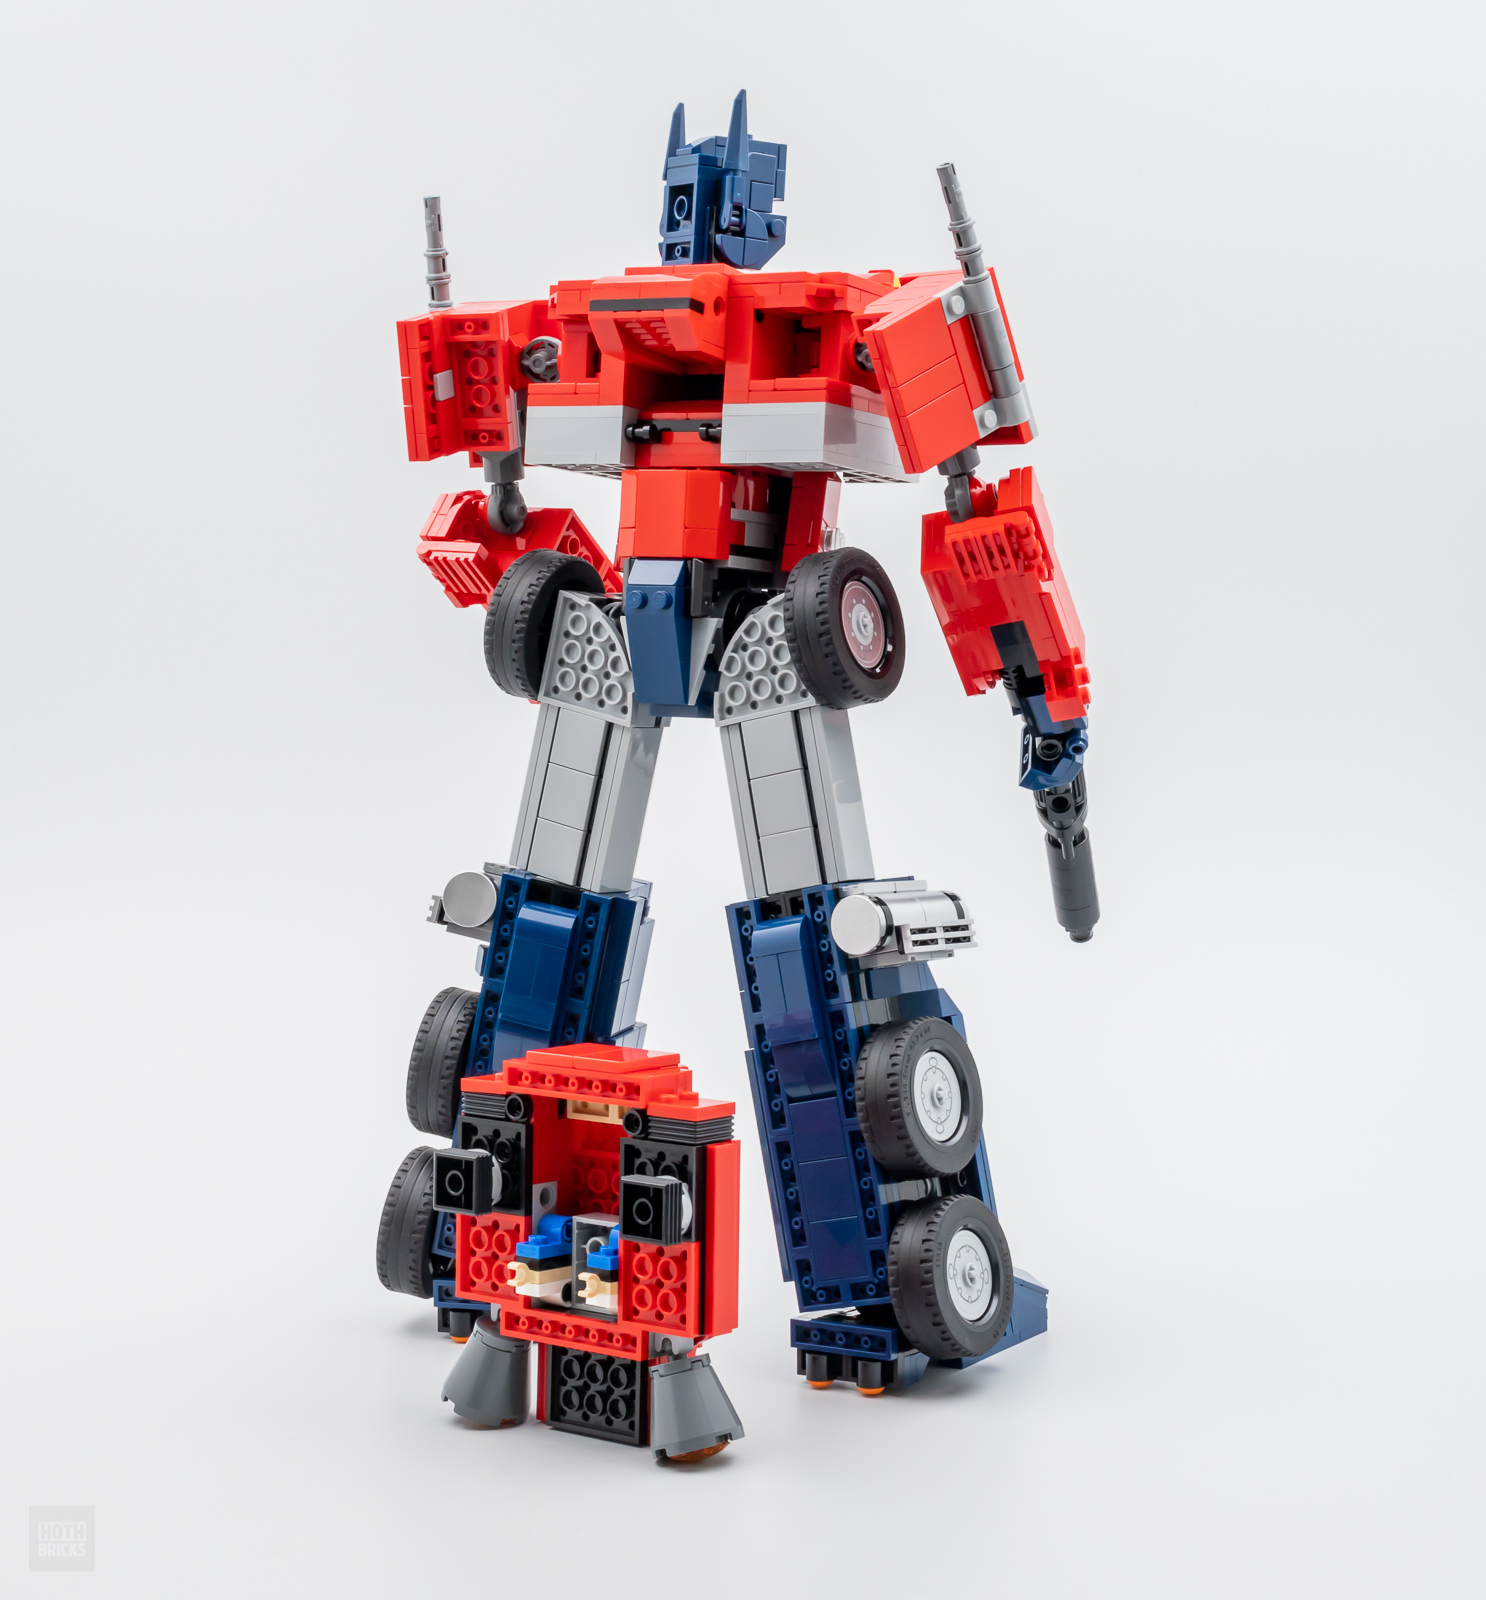 vokal skorsten kamp ▻ Review : LEGO 10302 Transformers Optimus Prime - HOTH BRICKS